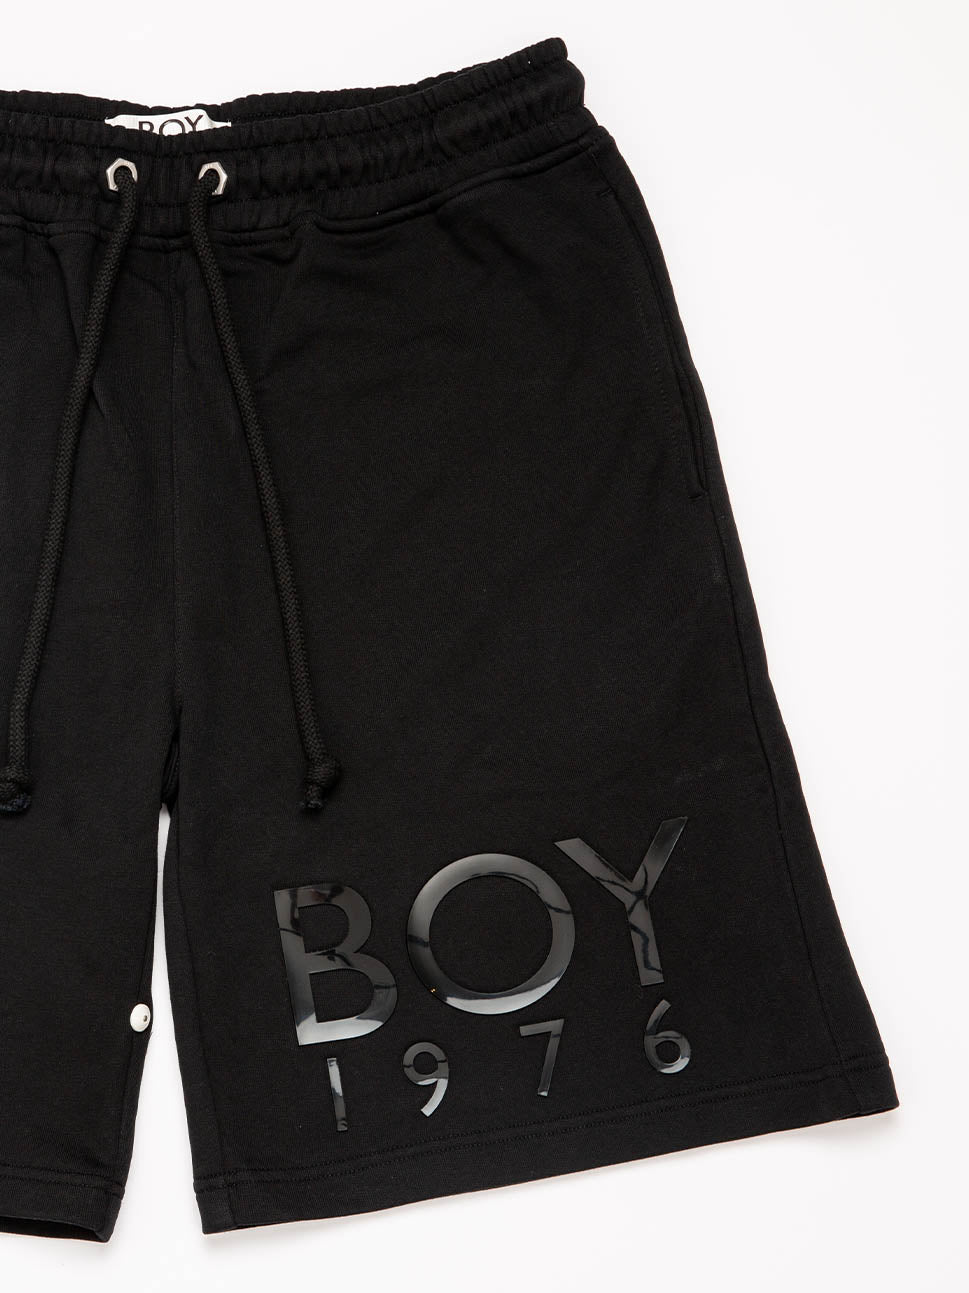 Boy London 1976 Shorts Black